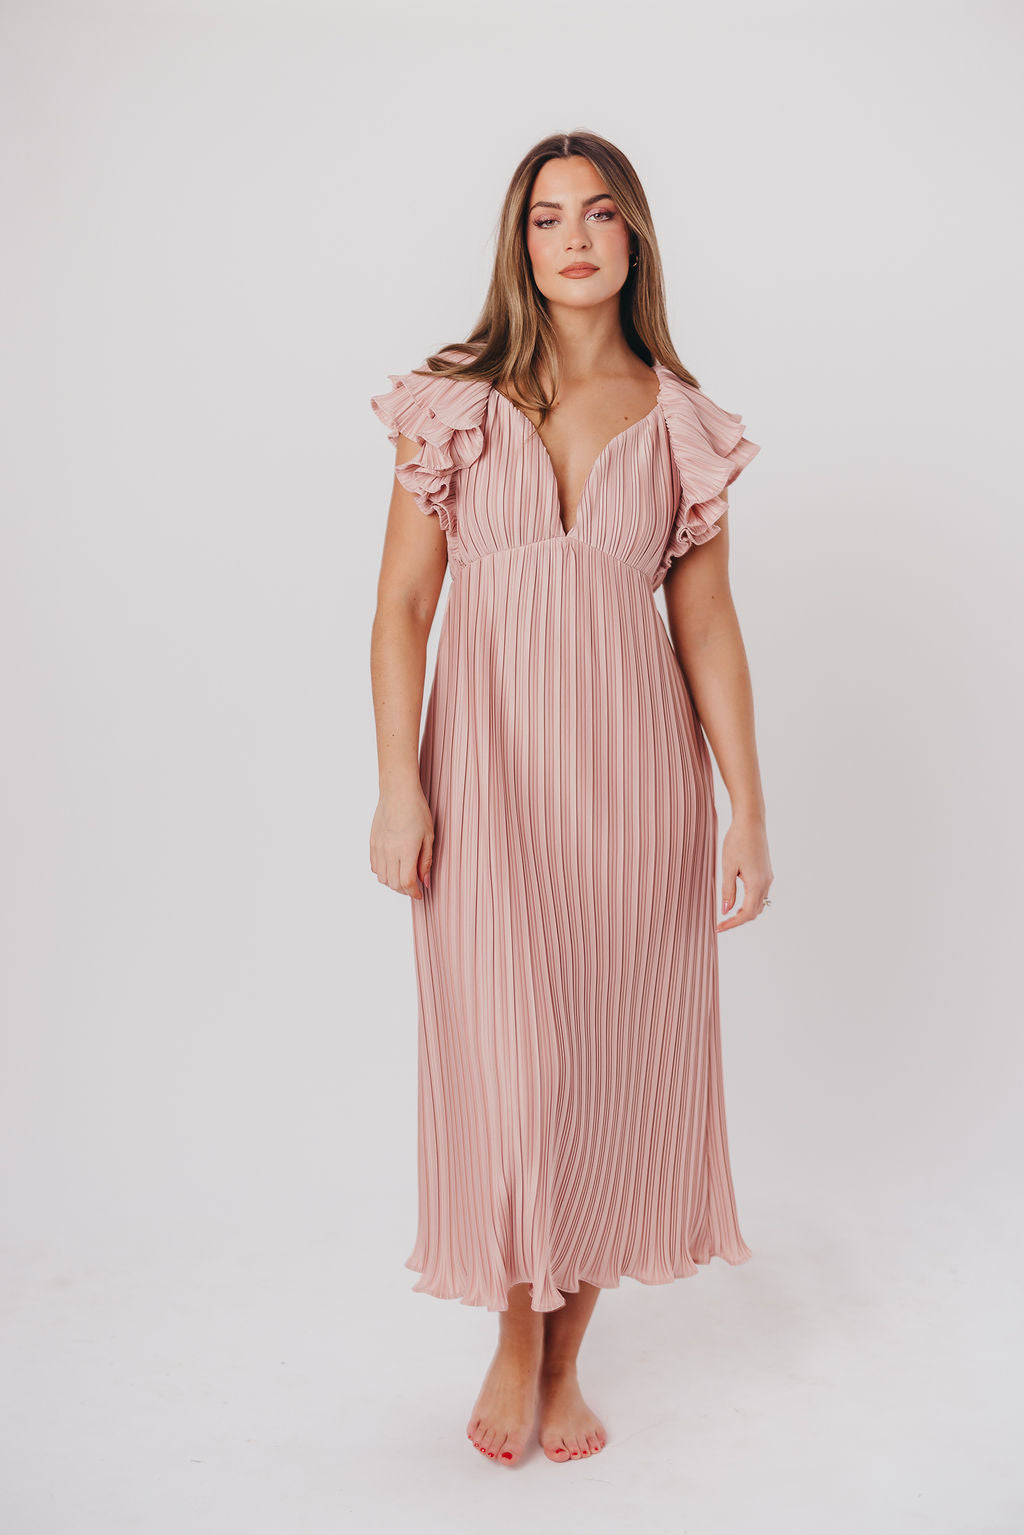 Lucky Charm Midi Dress in Tea Rose - Bump Friendly & Inclusive Sizing (S-3XL)